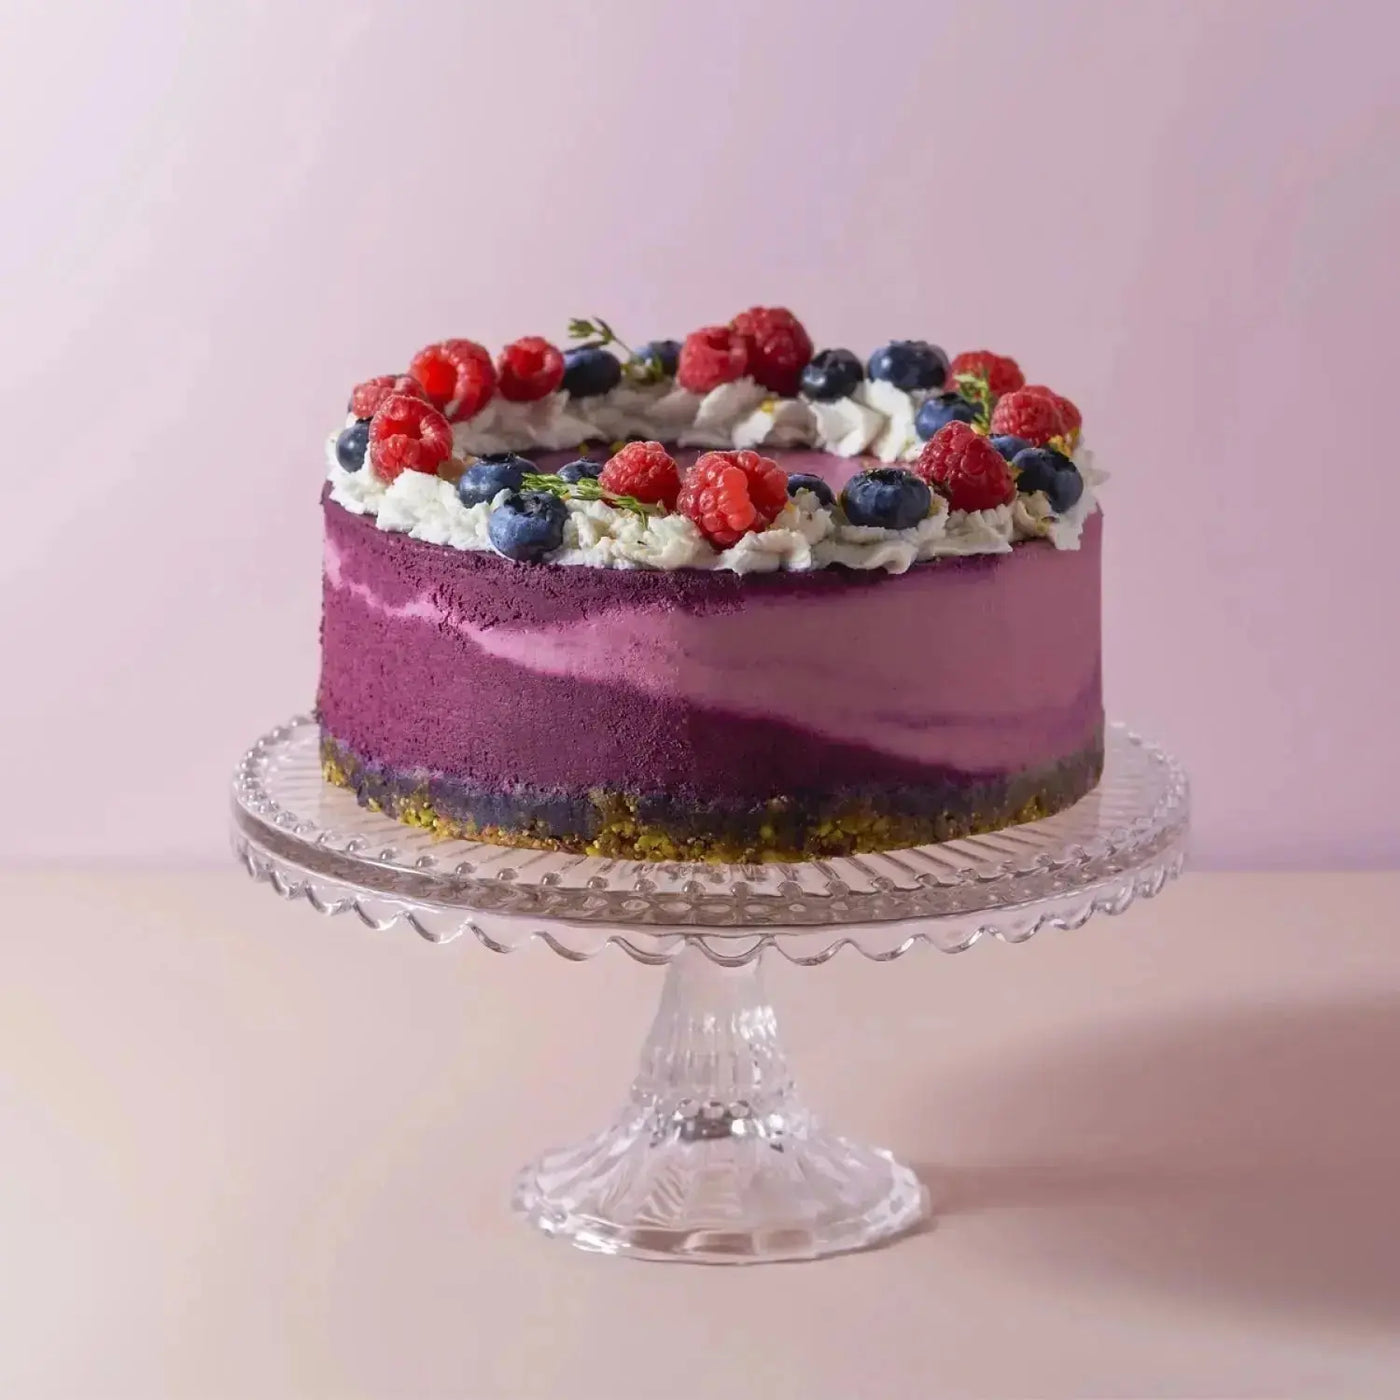 Blueberry raspberry RAW cake - Take a Break, An amazing dessert